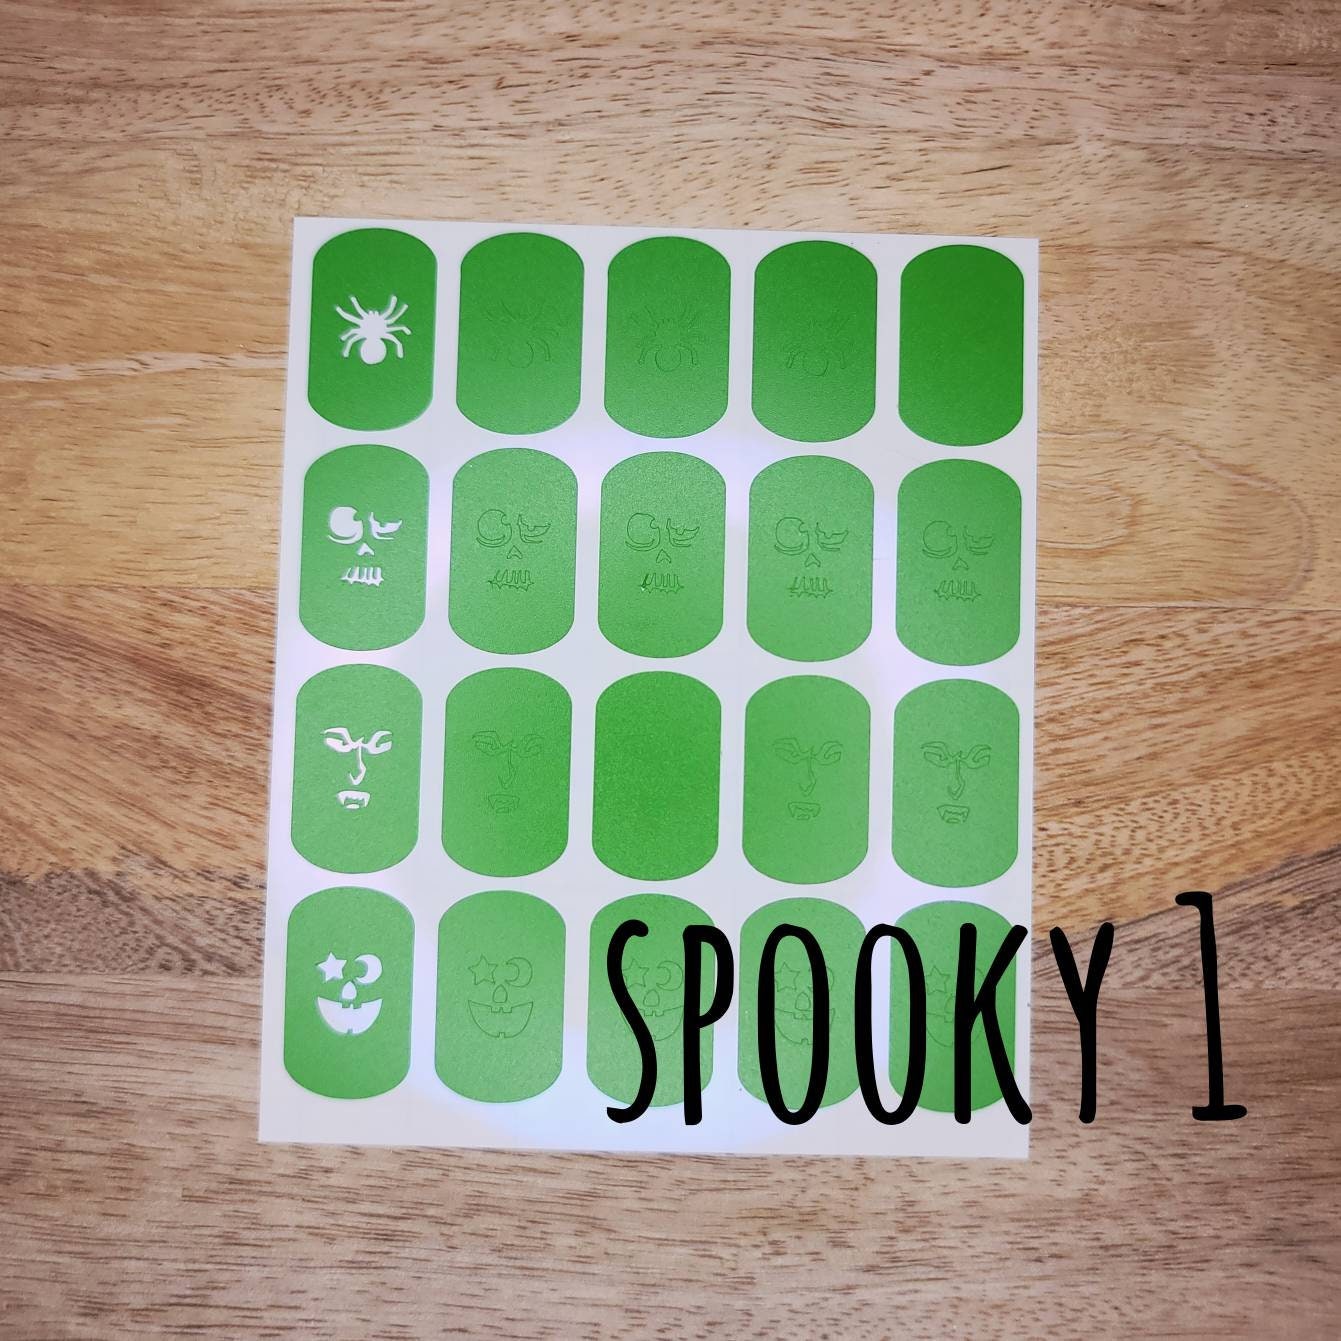 Spooky 1 Nail Vinyls